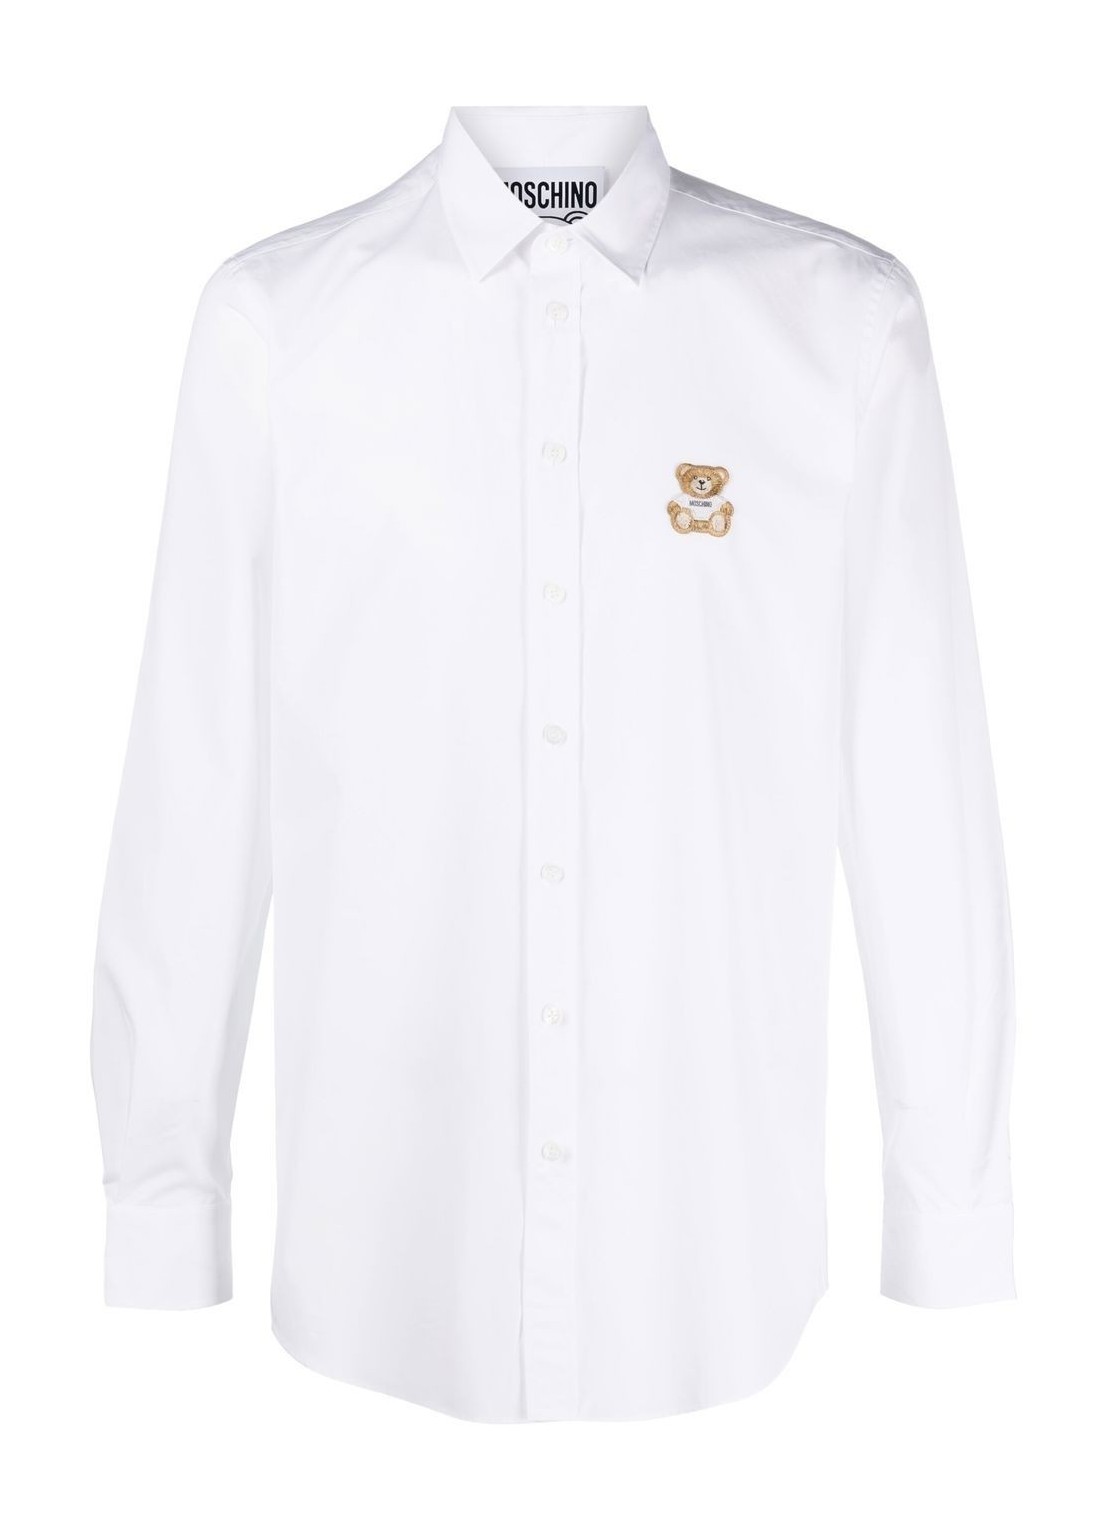 Camiseria moschino couture shirt man blouse 02212035 a1001 talla 42
 